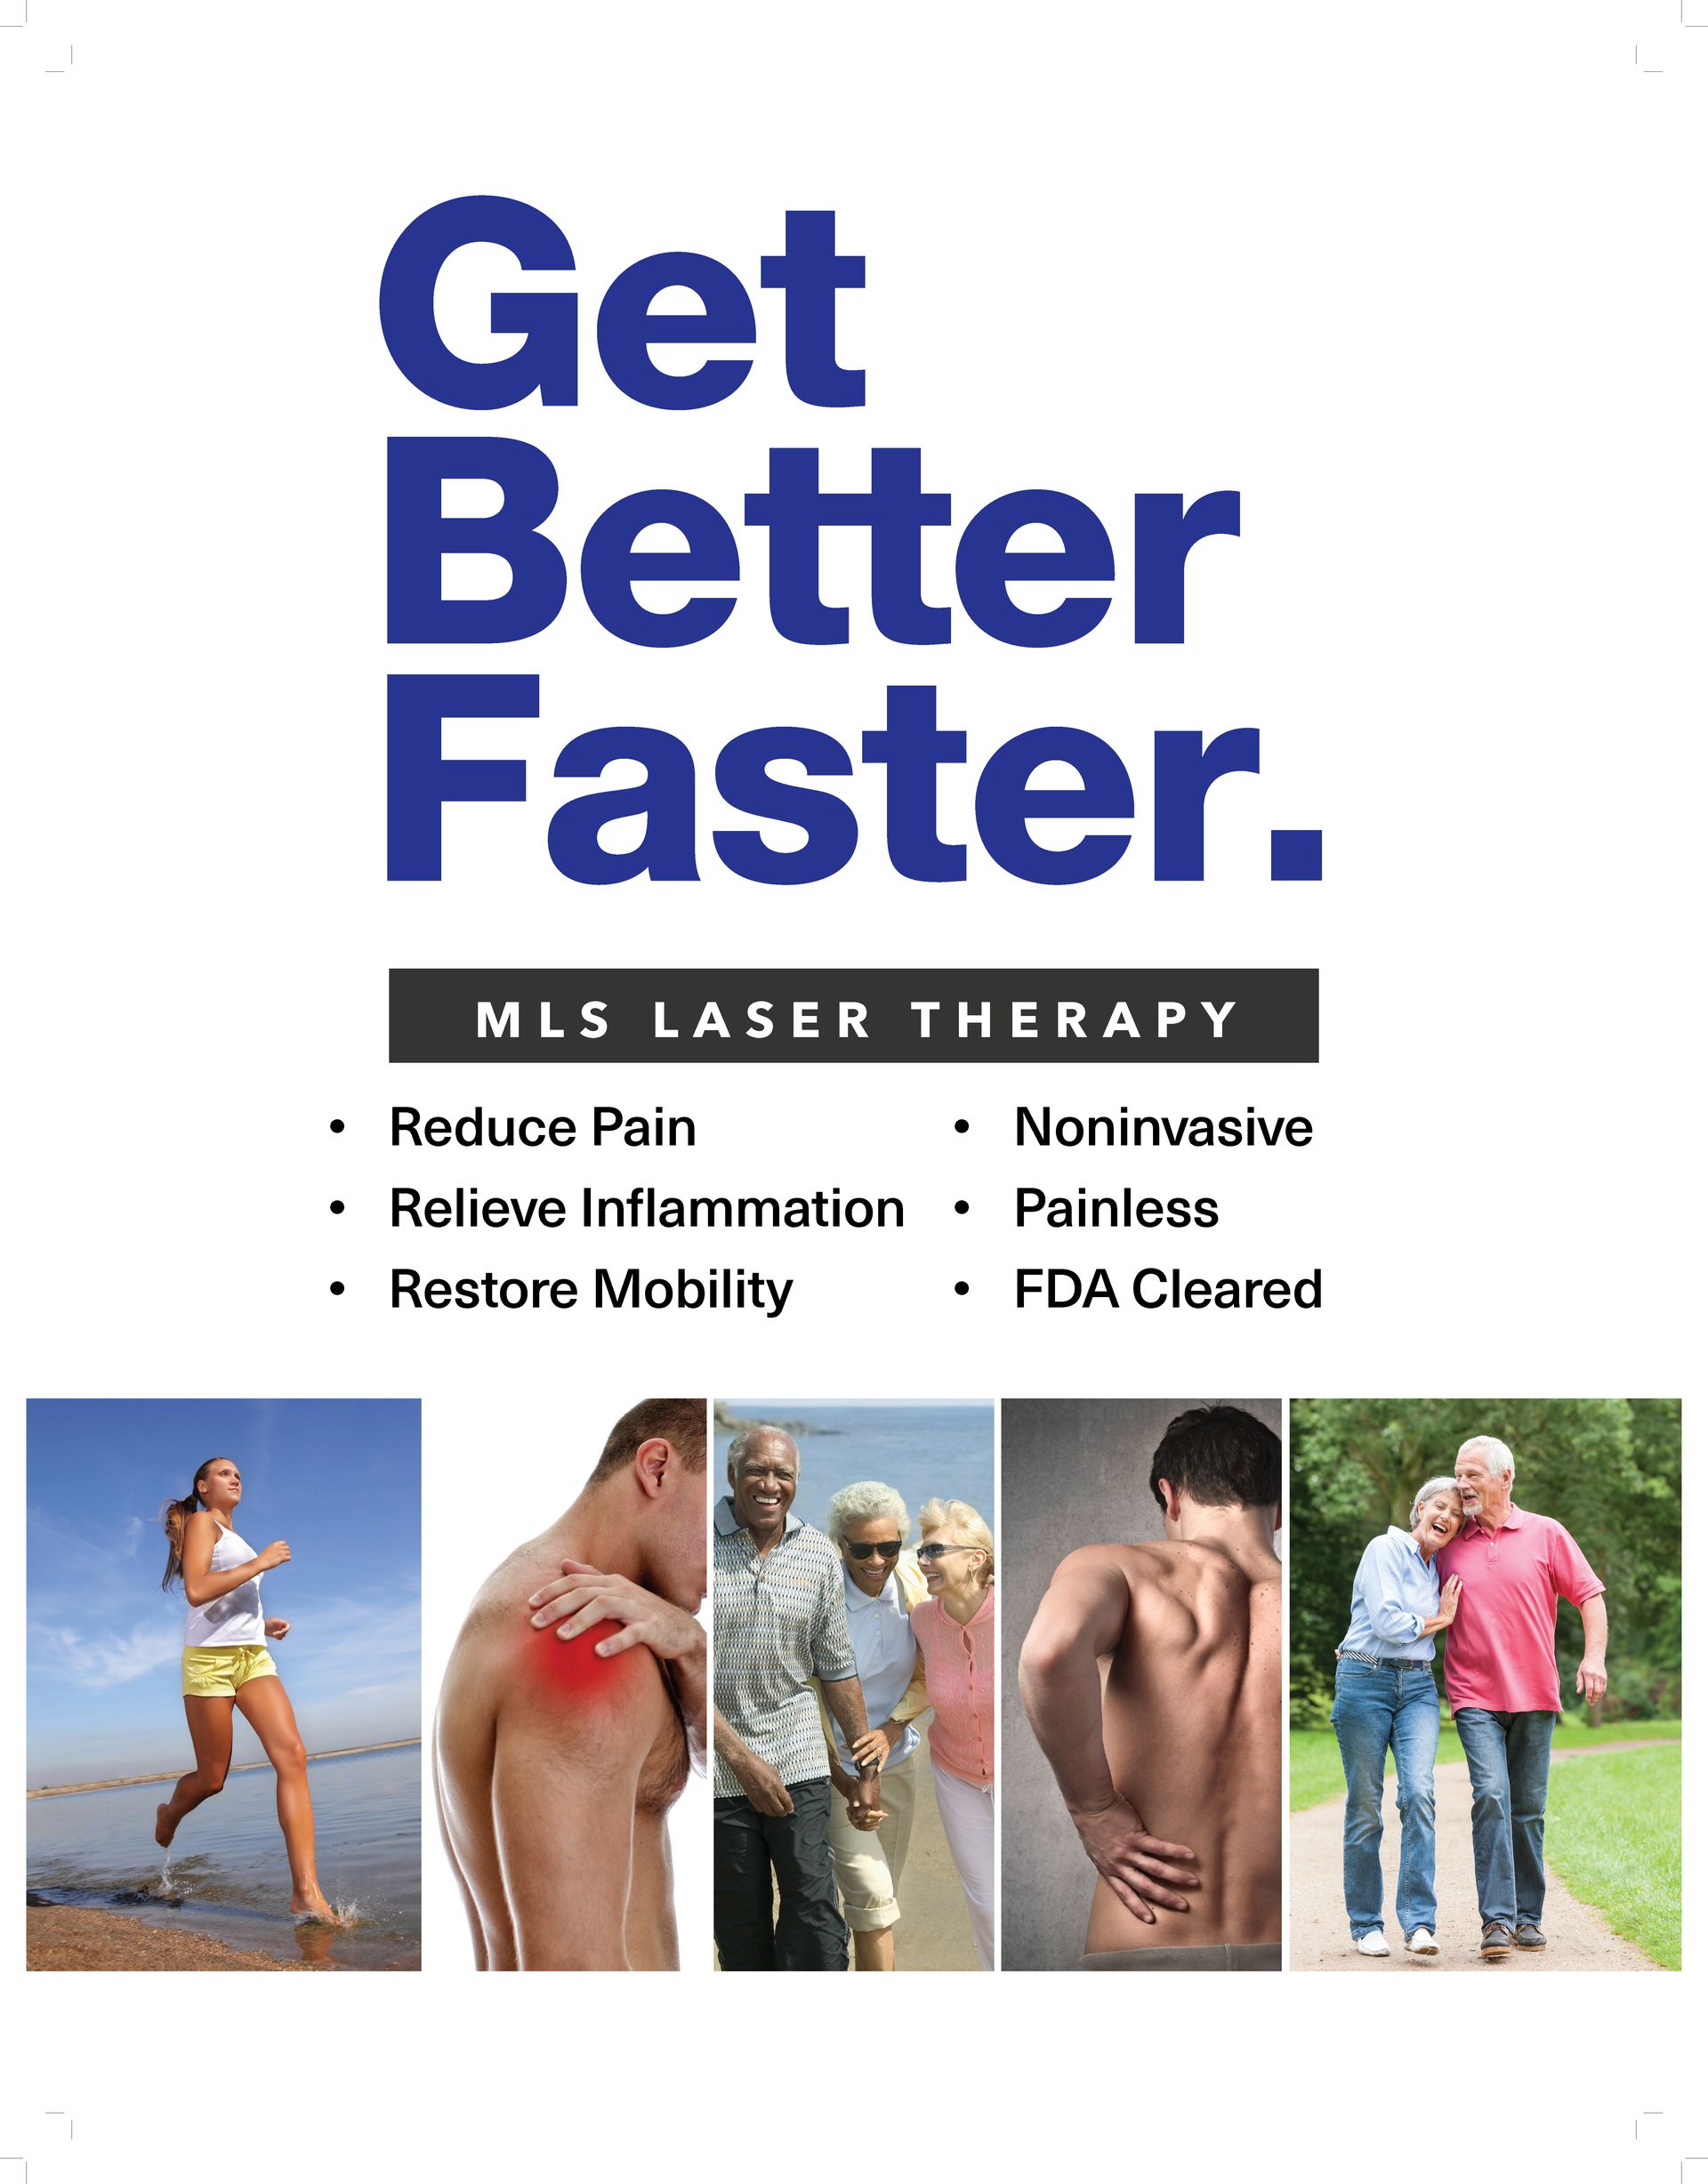 Get better faster poster - Clifton Park, NY - Capital Region Calmare & Massage PLLC